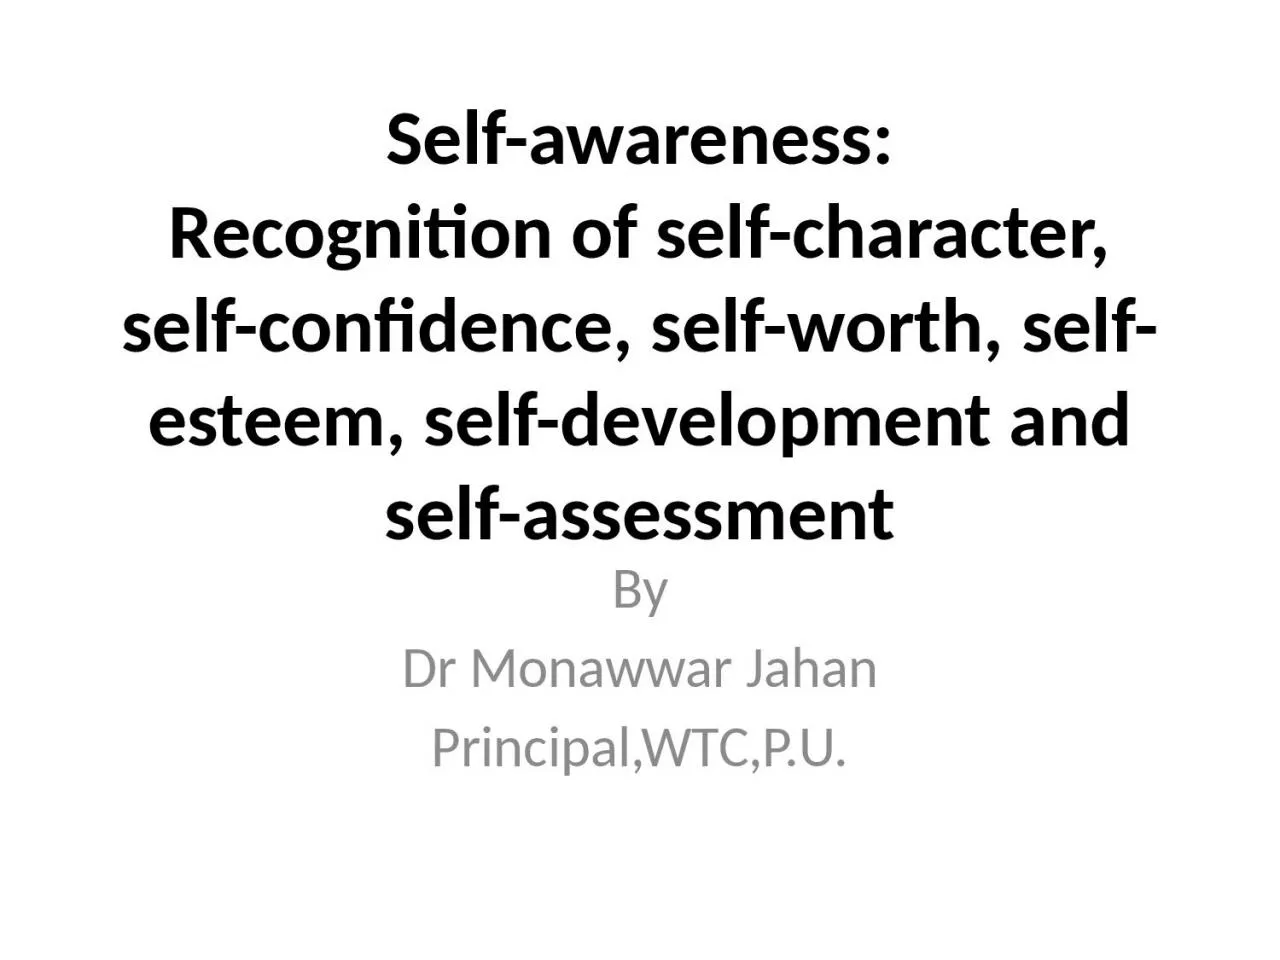 Self-awareness: Recognition